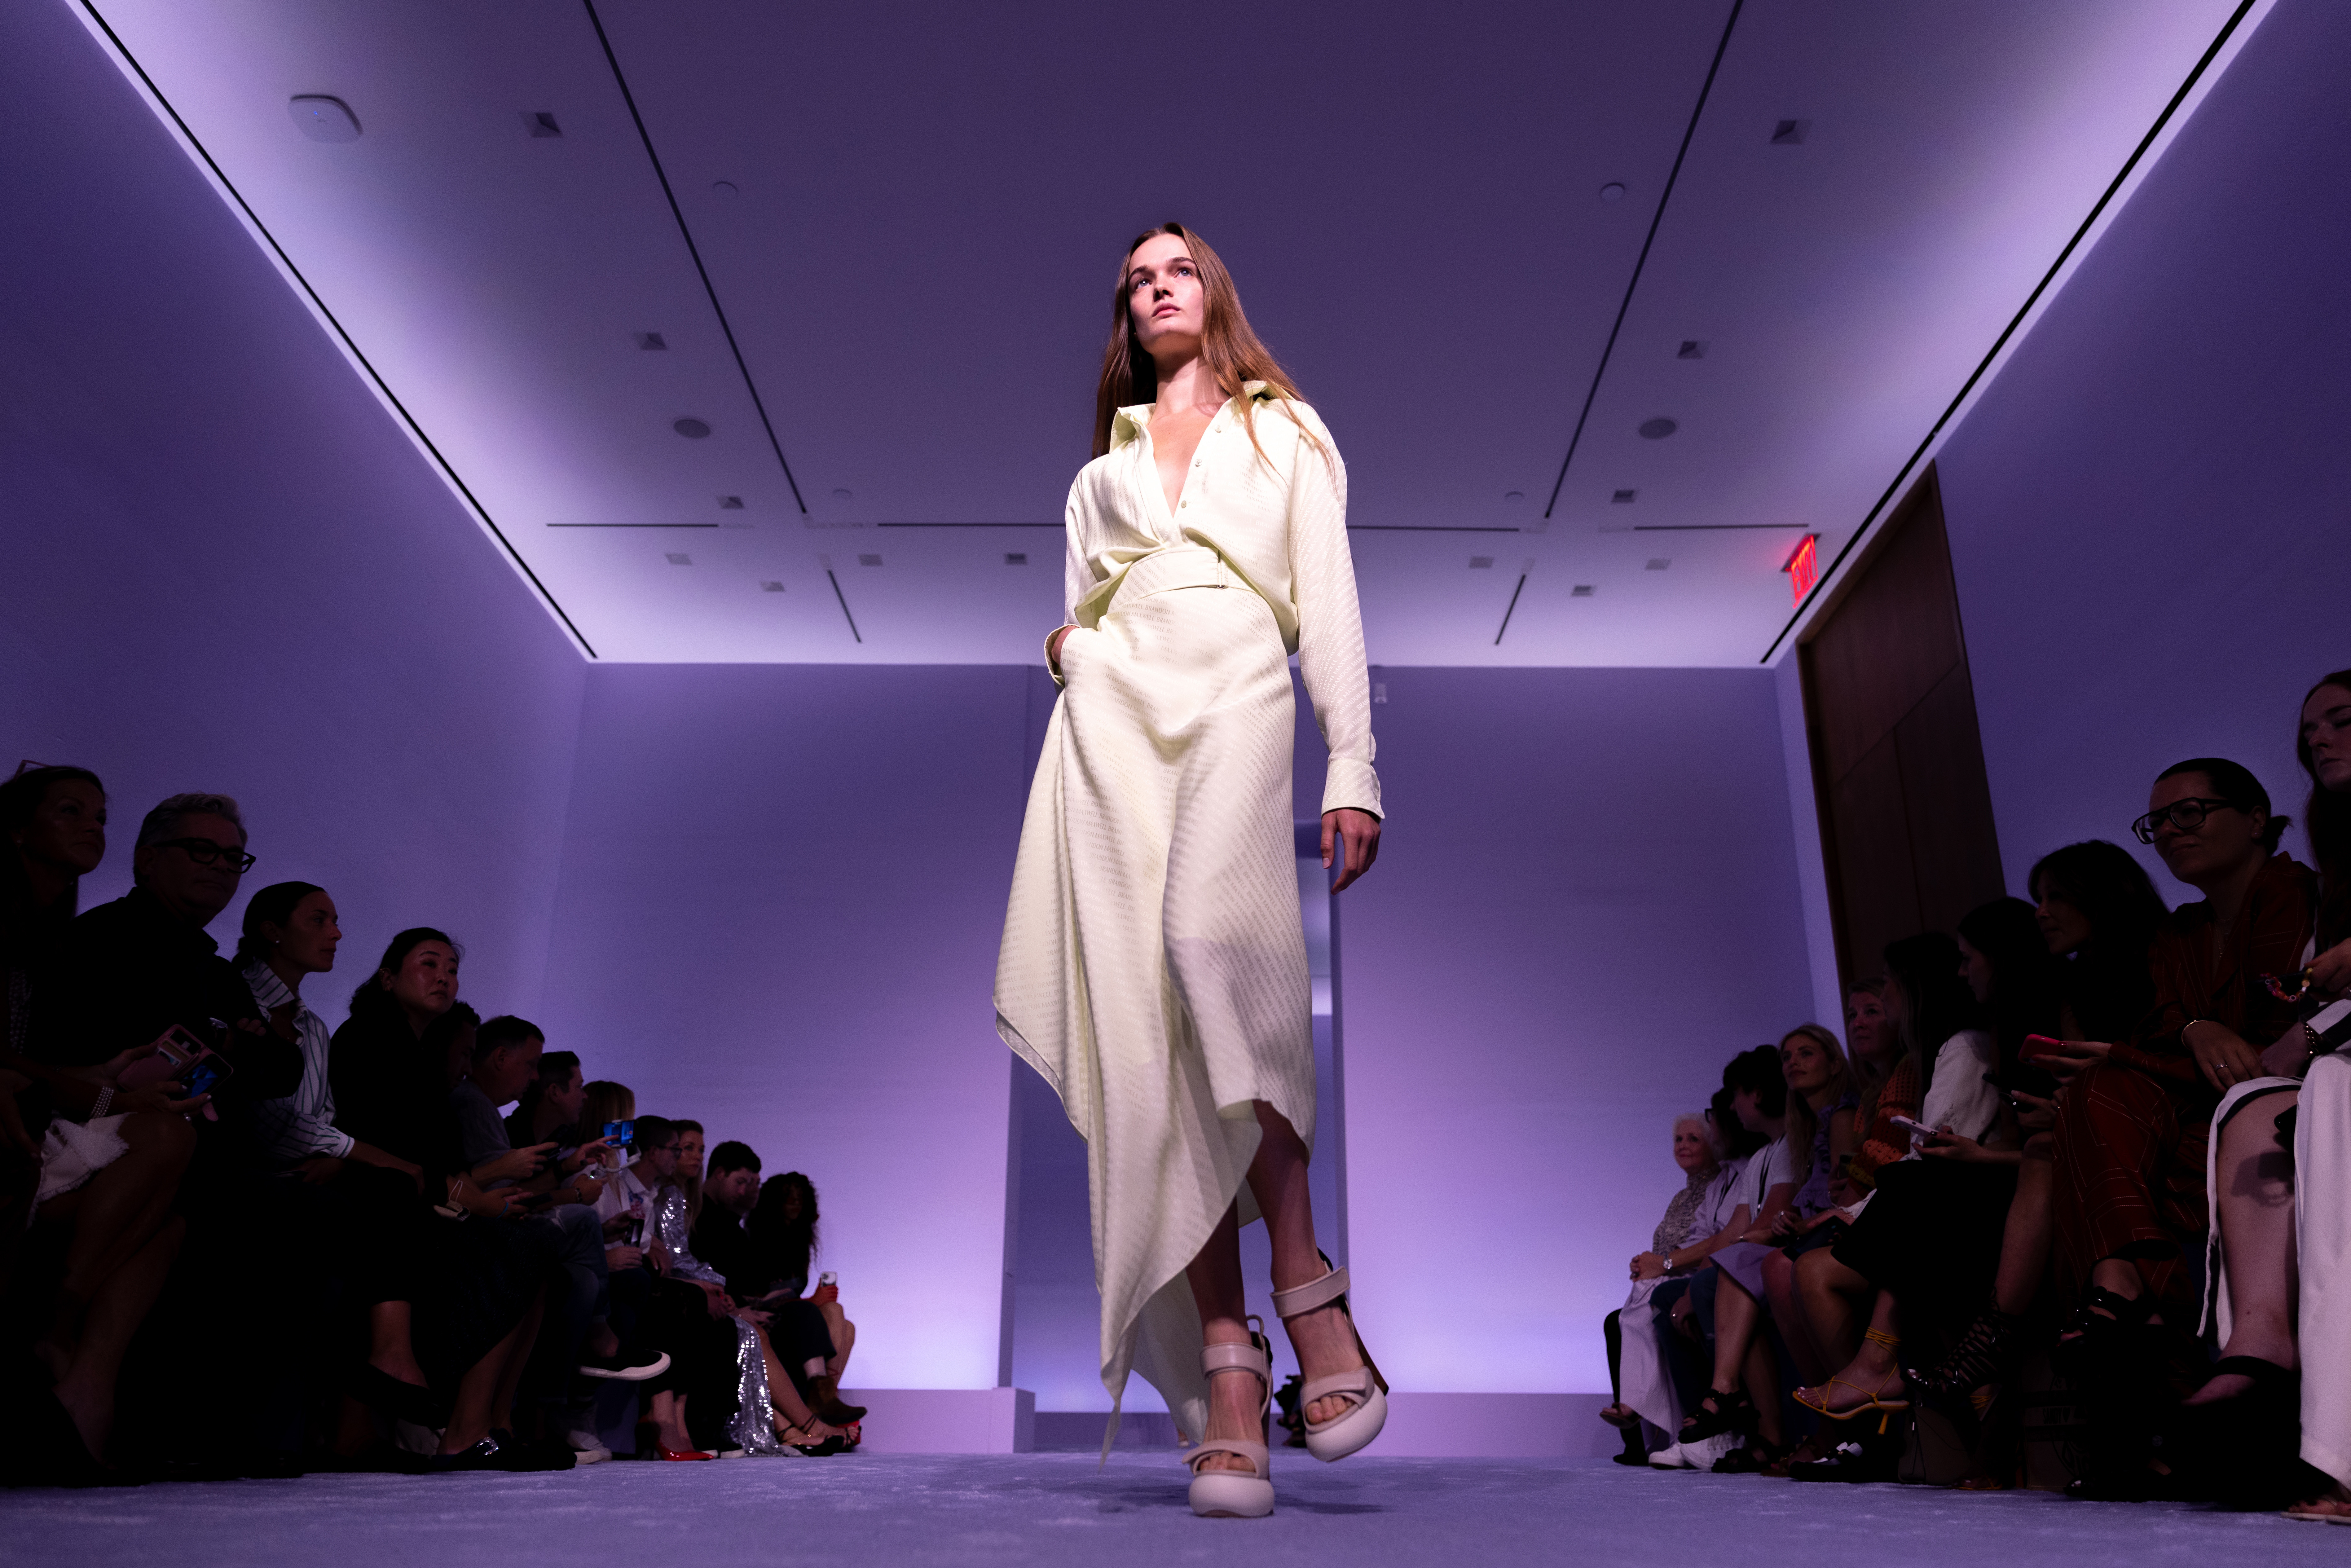 Maxwell brings shimmer, shine and smiles to NY Fashion Week